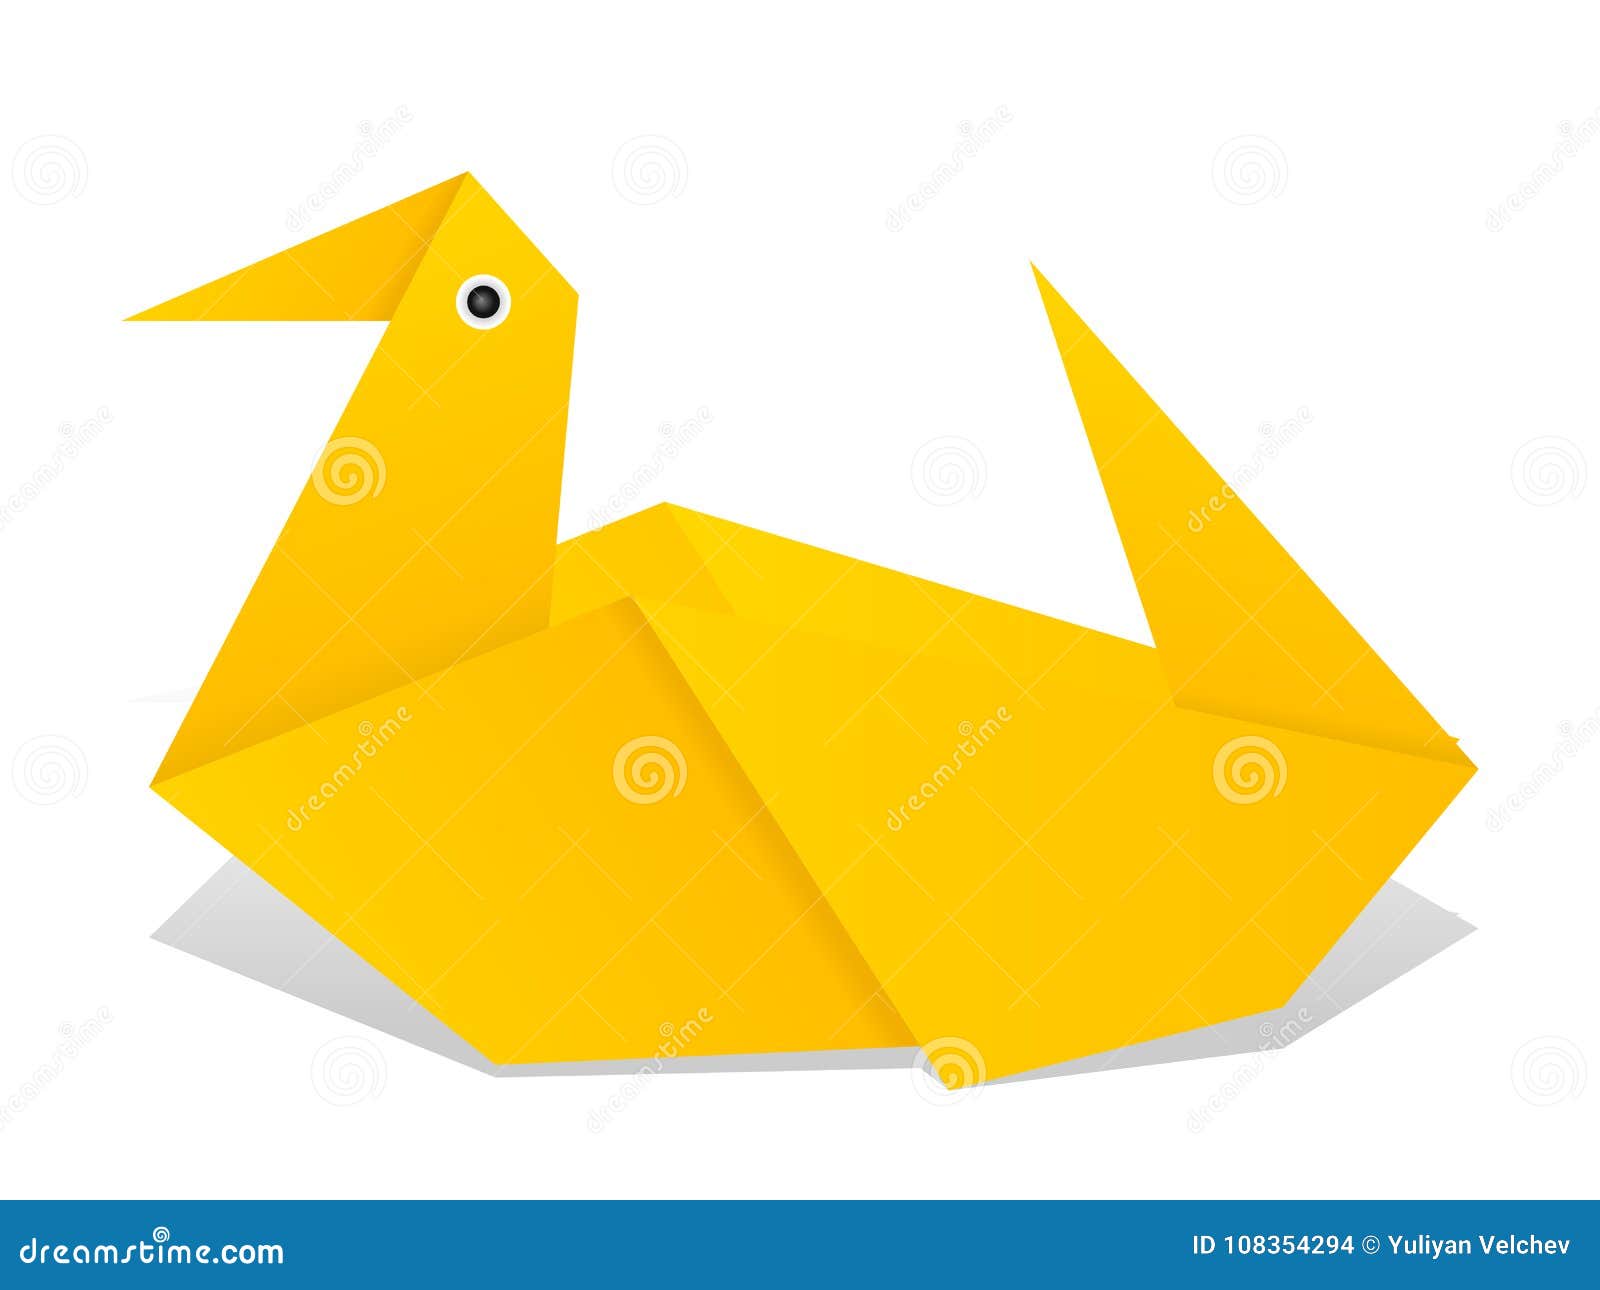 Origami duck stock vector. Illustration of symbol, japanese - 108354294